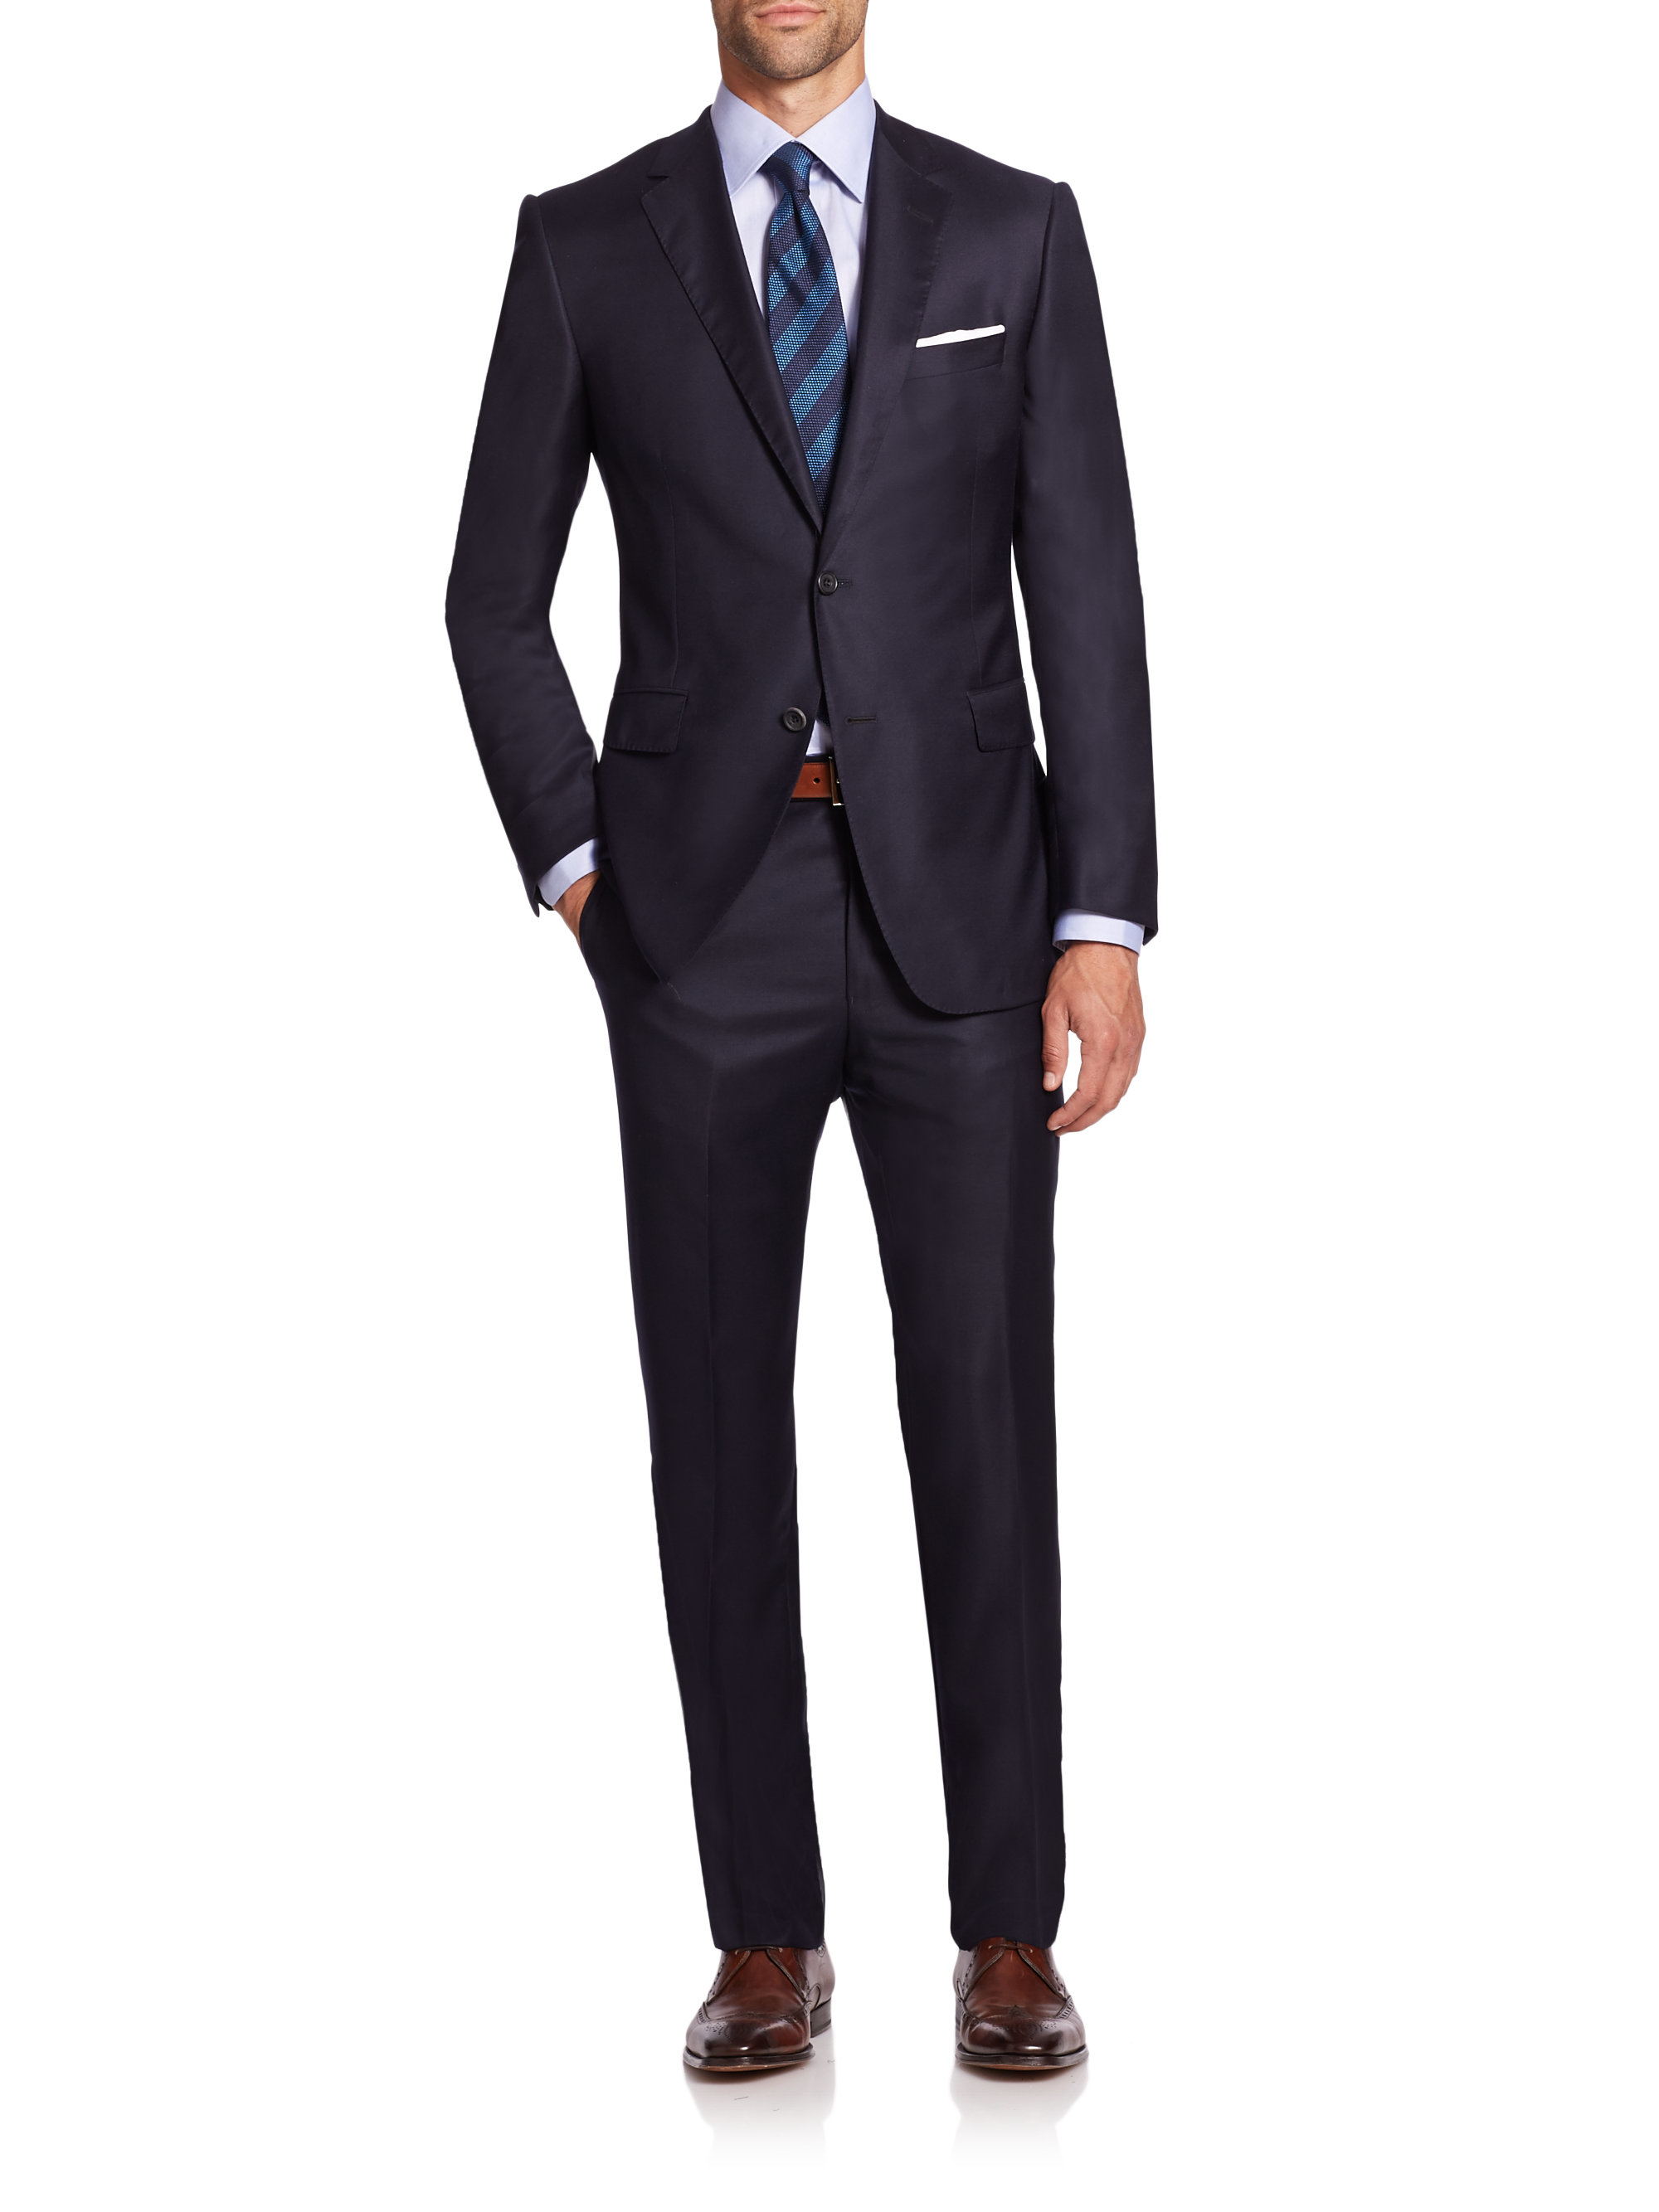 Lyst - Saks Fifth Avenue Samuelsohn Cashmere Suit in Blue for Men